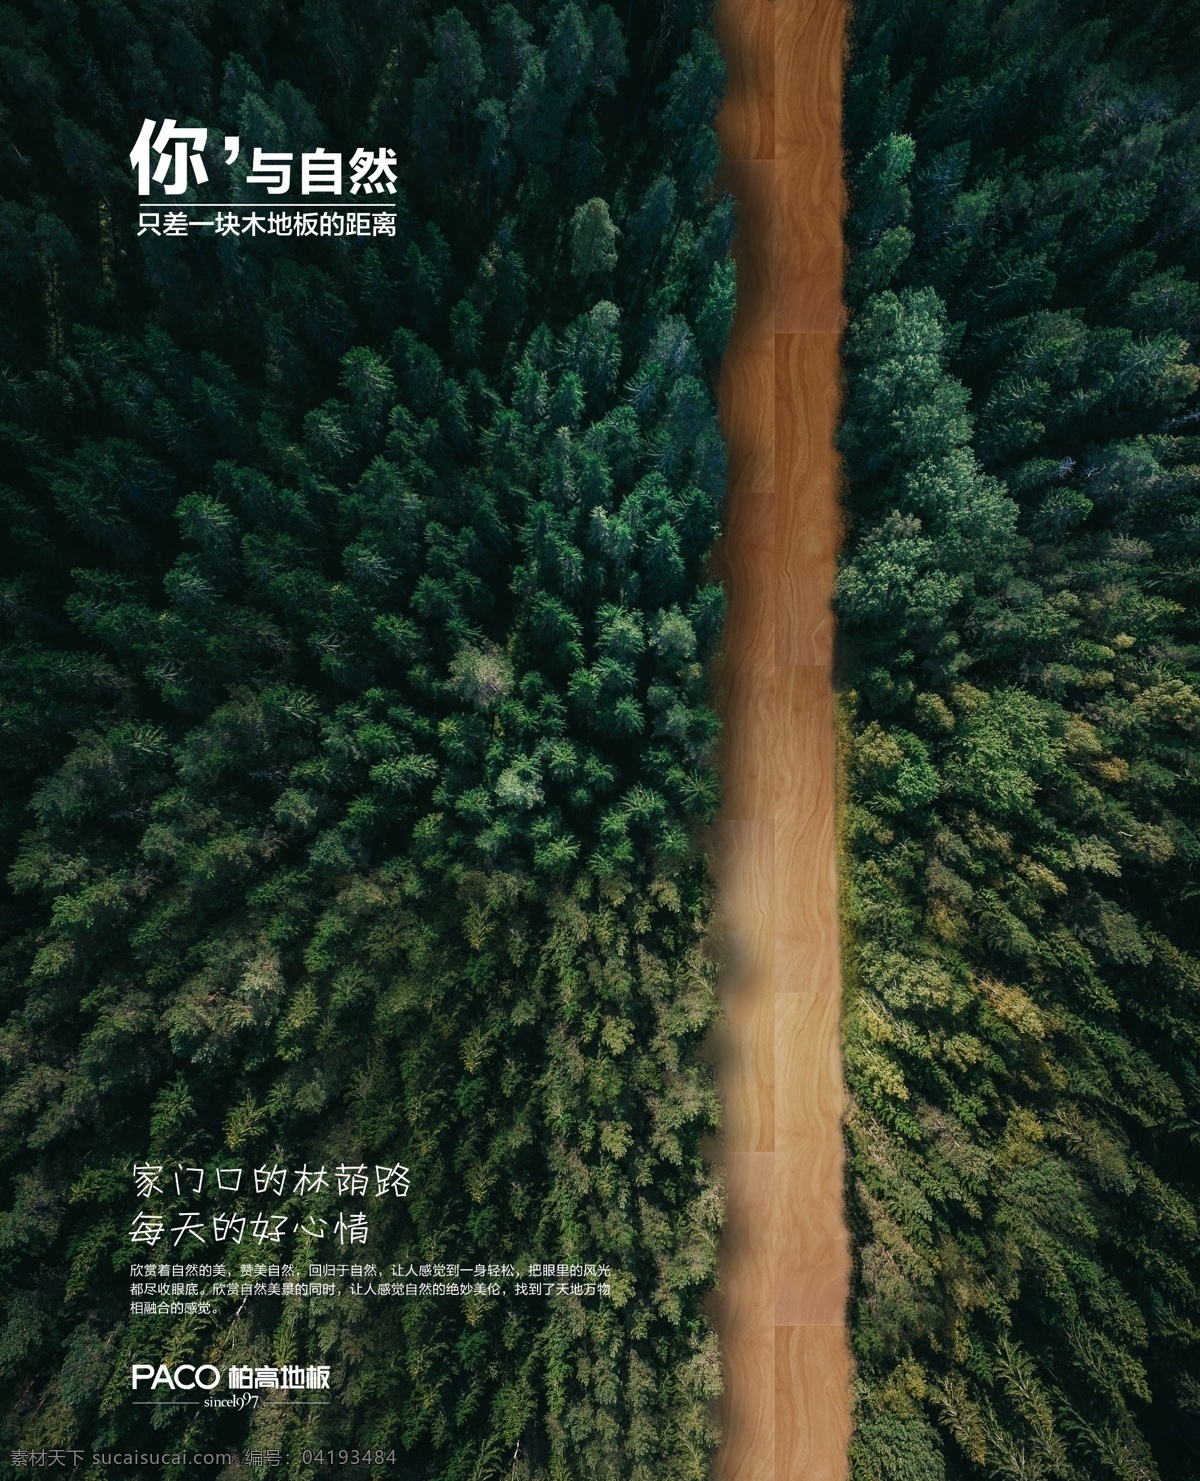 bg 地板 创意 海报 自然 森林 地板创意海报